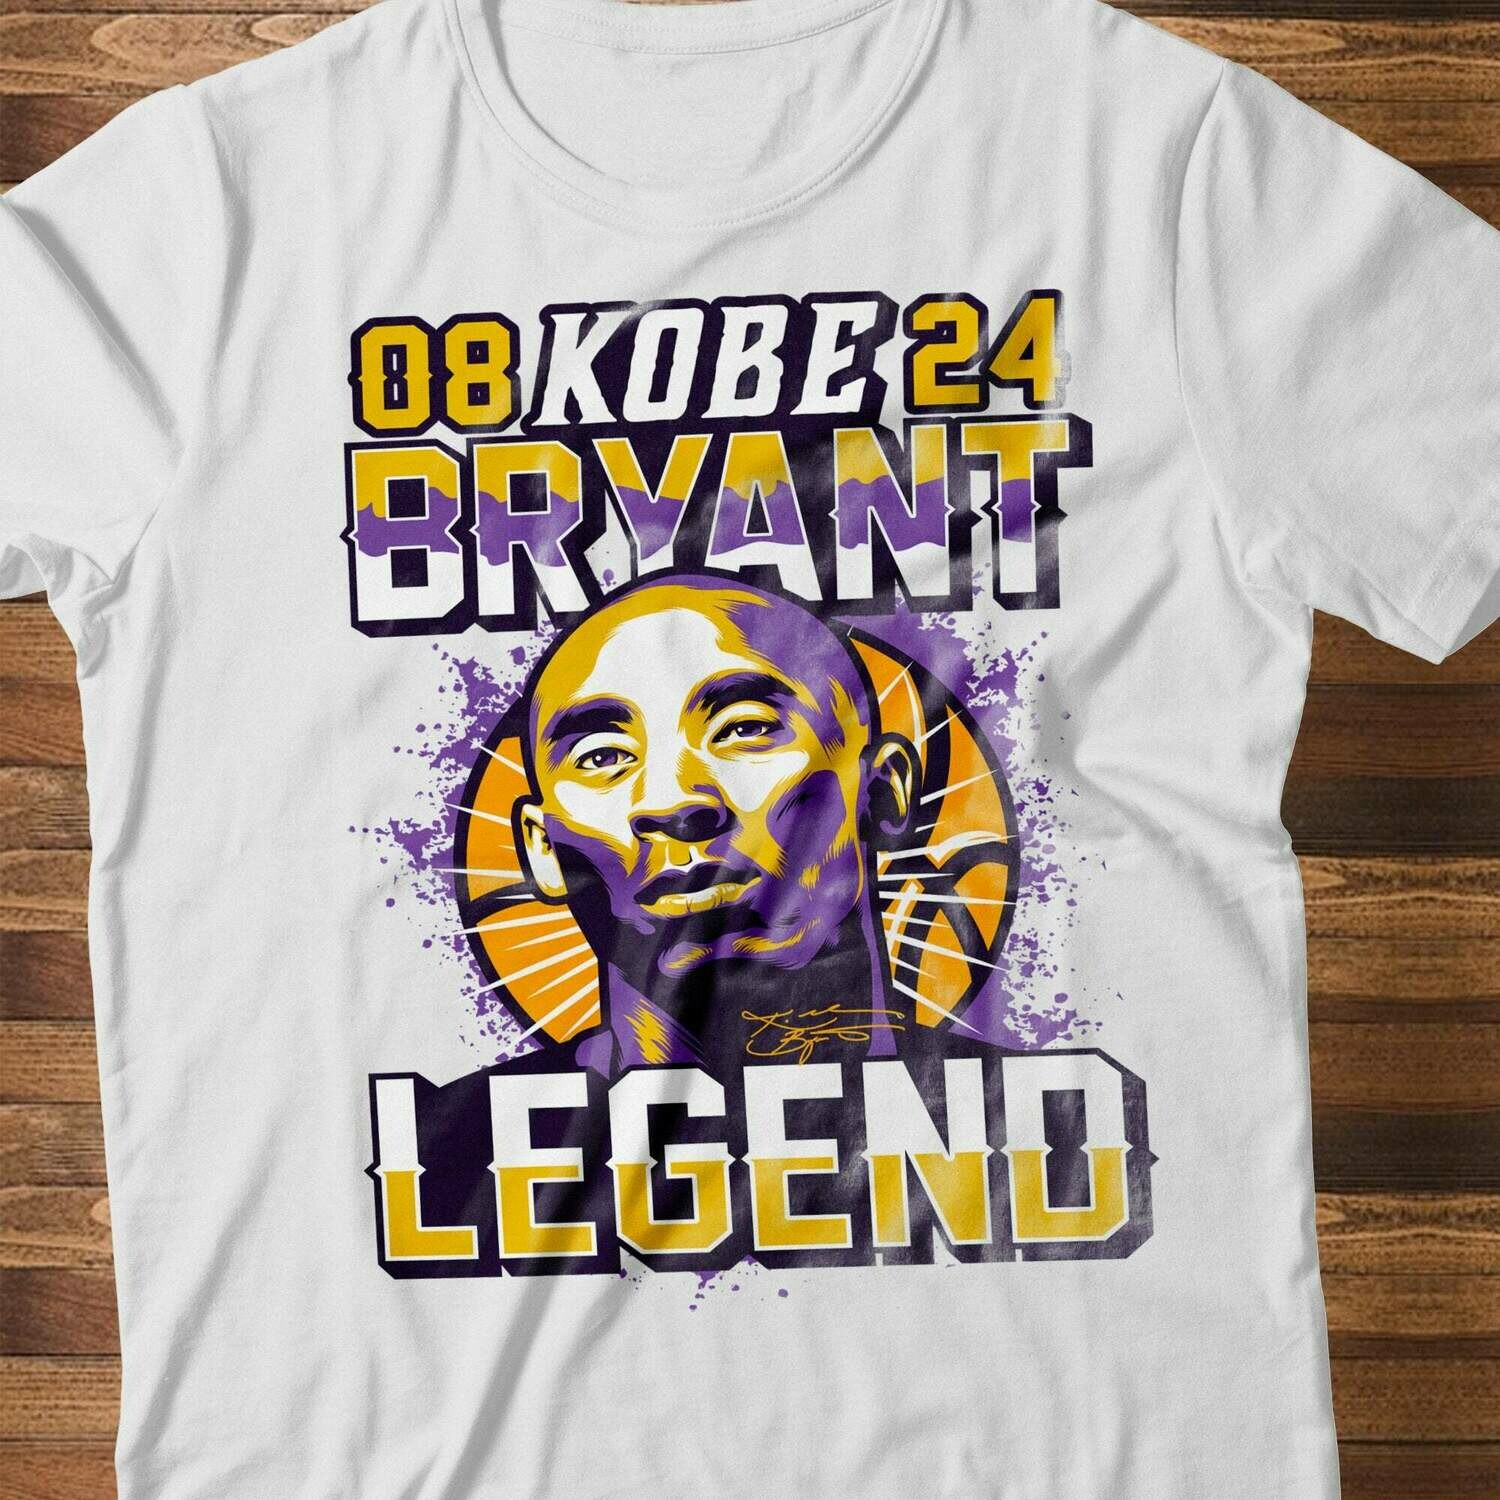 kobe bryant legend shirt